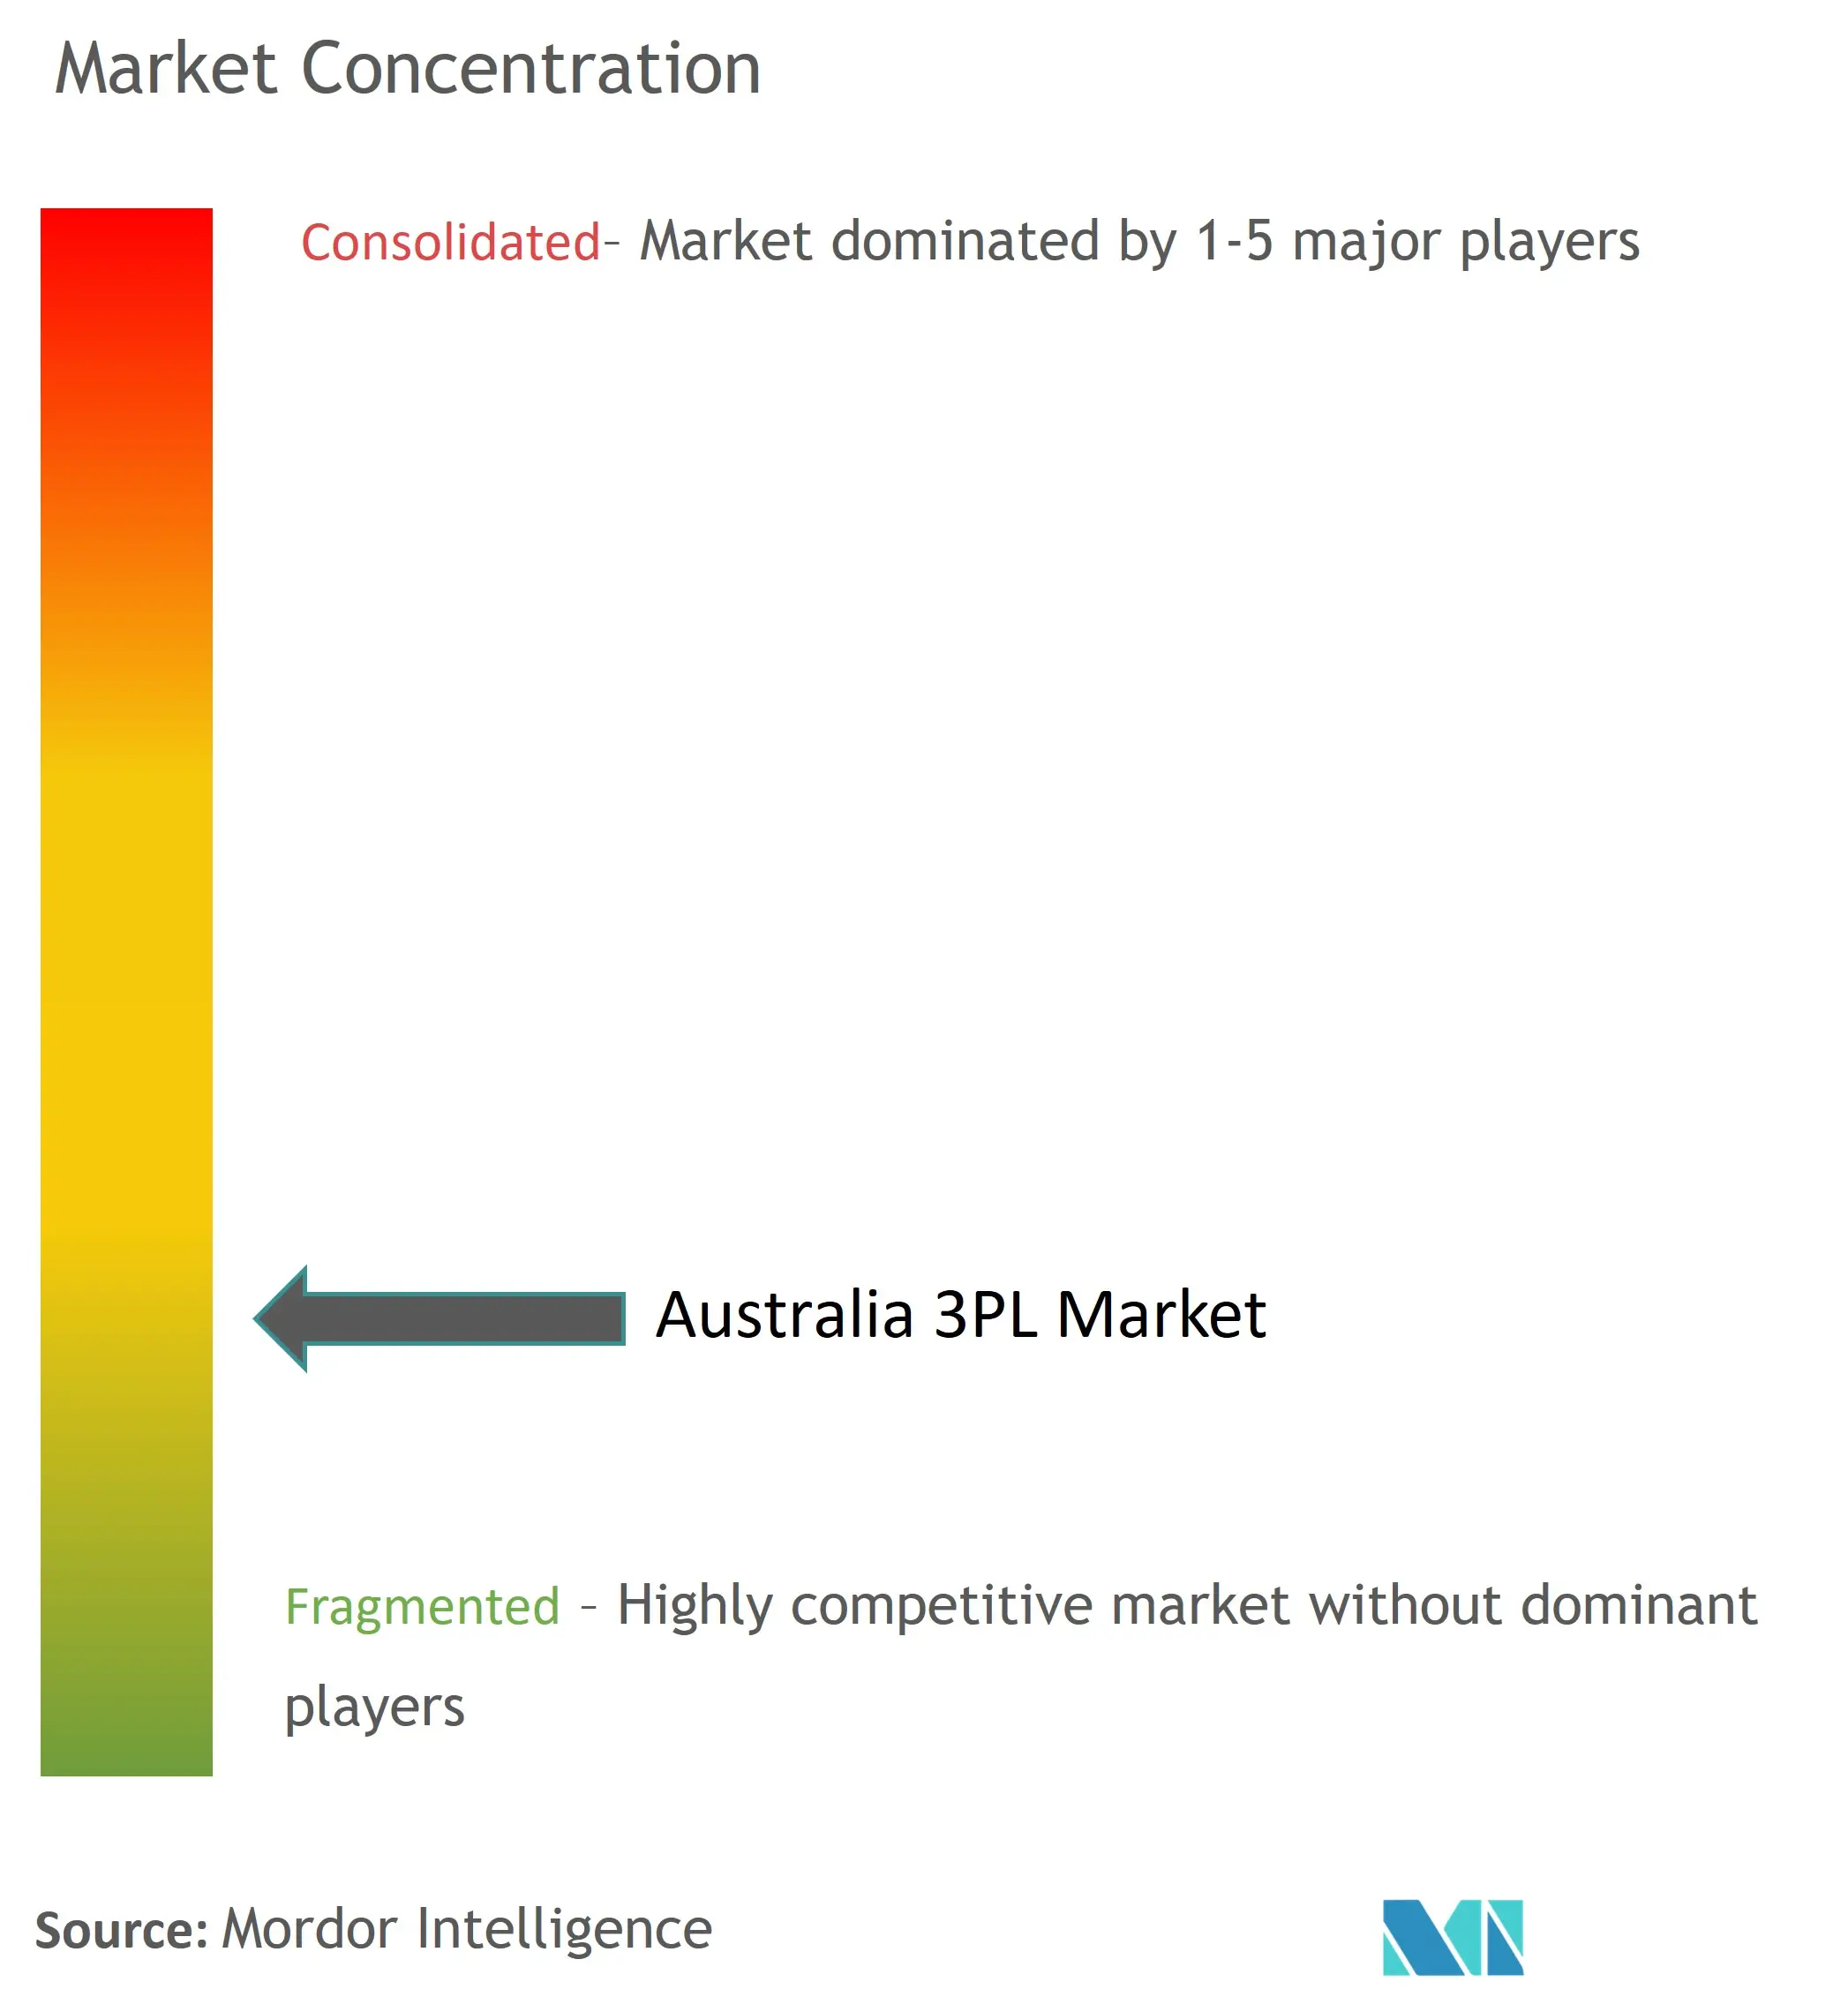 3PL-Marktkonzentration in Australien